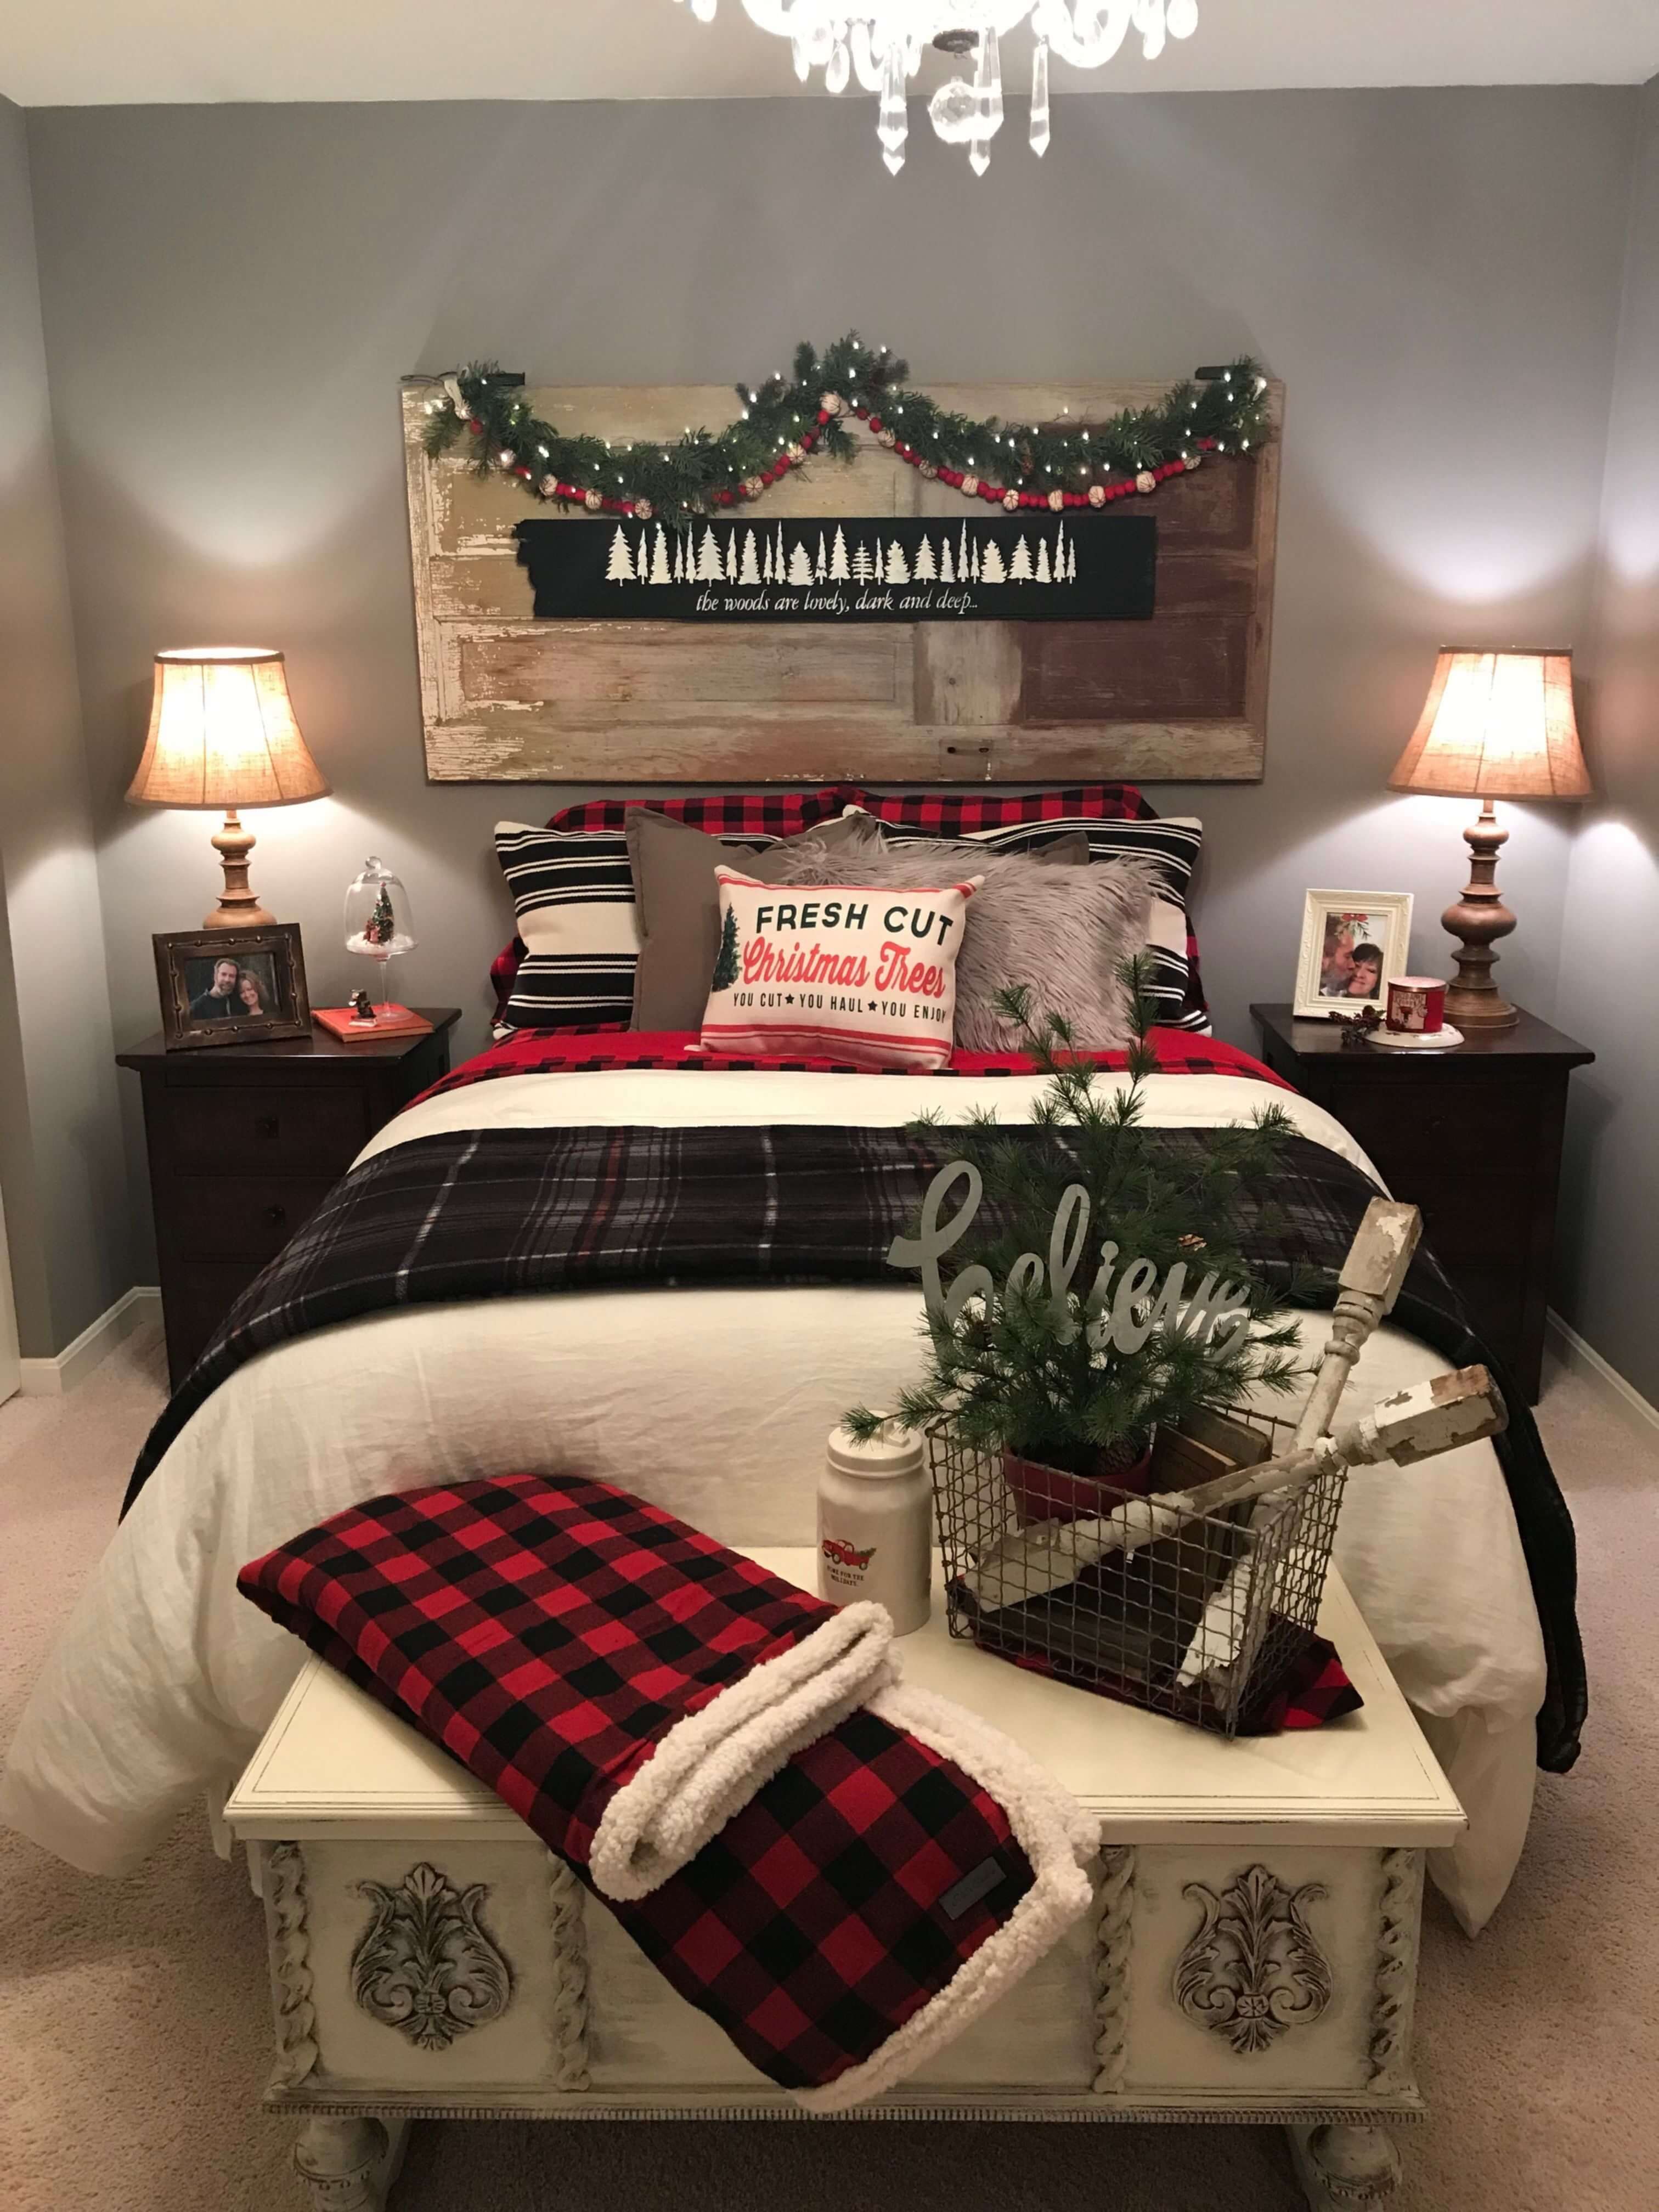 Winter wonderland bedroom decor